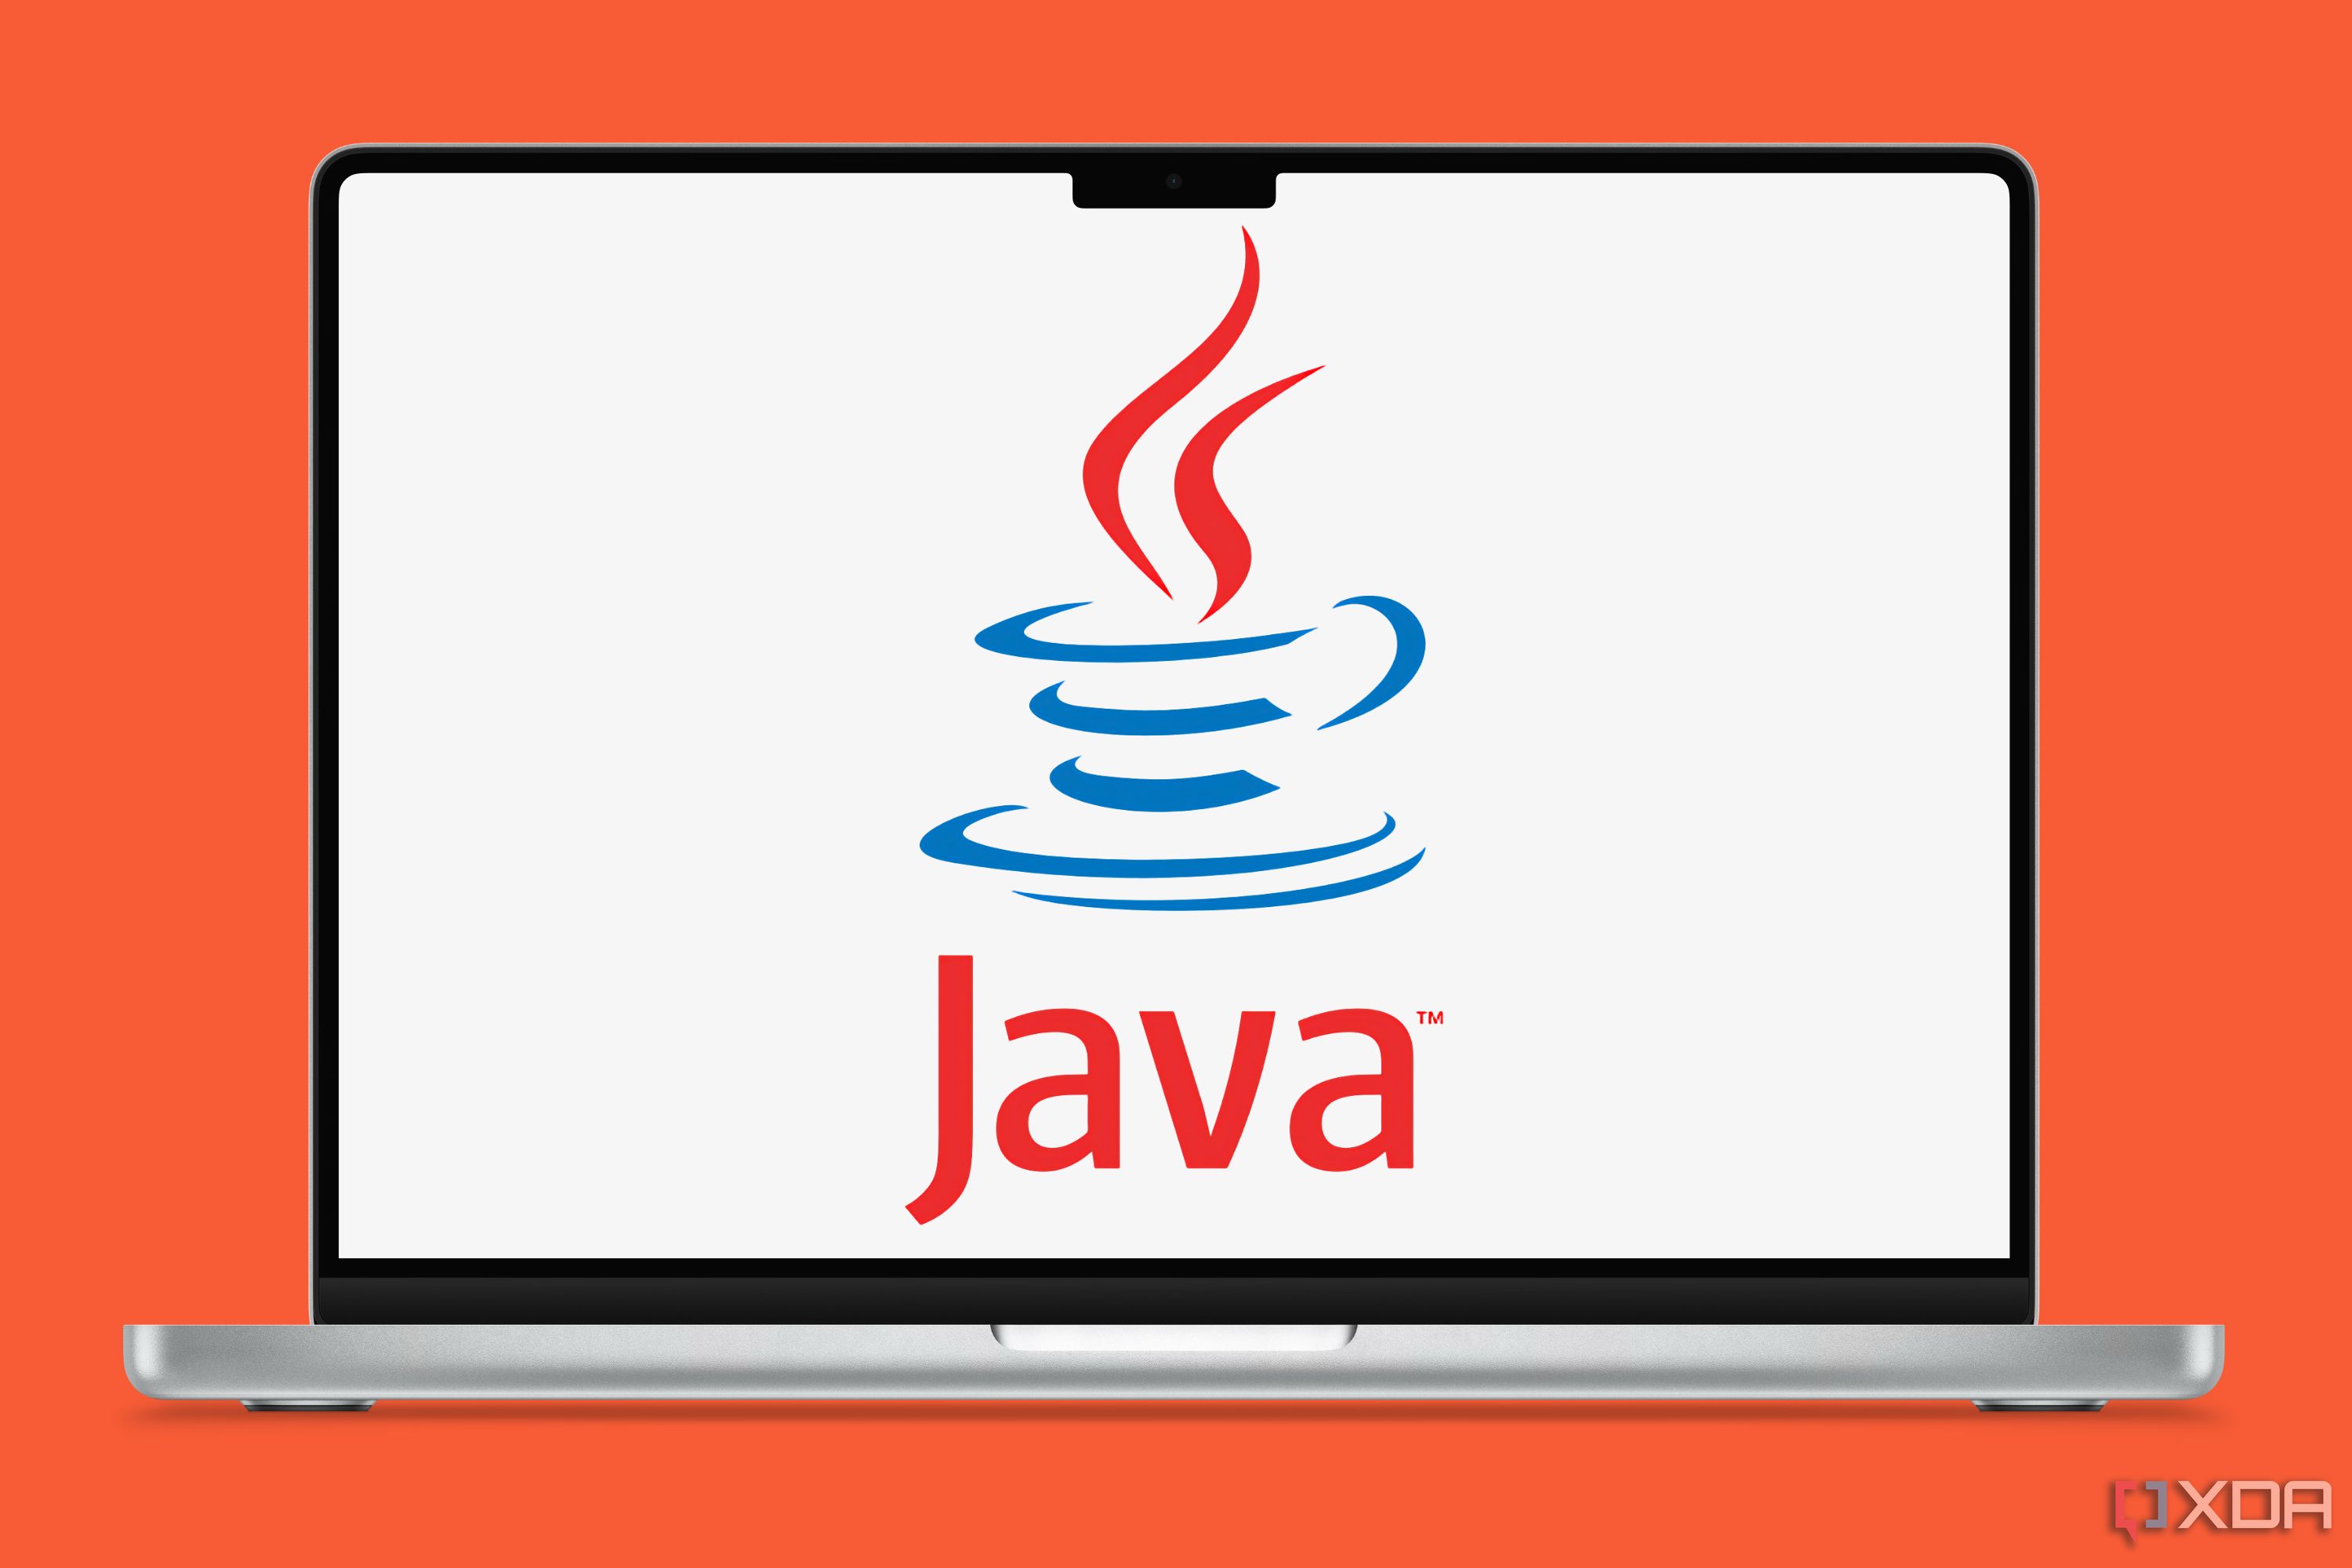 A digital mockup of the Java logo on a Mac computer.